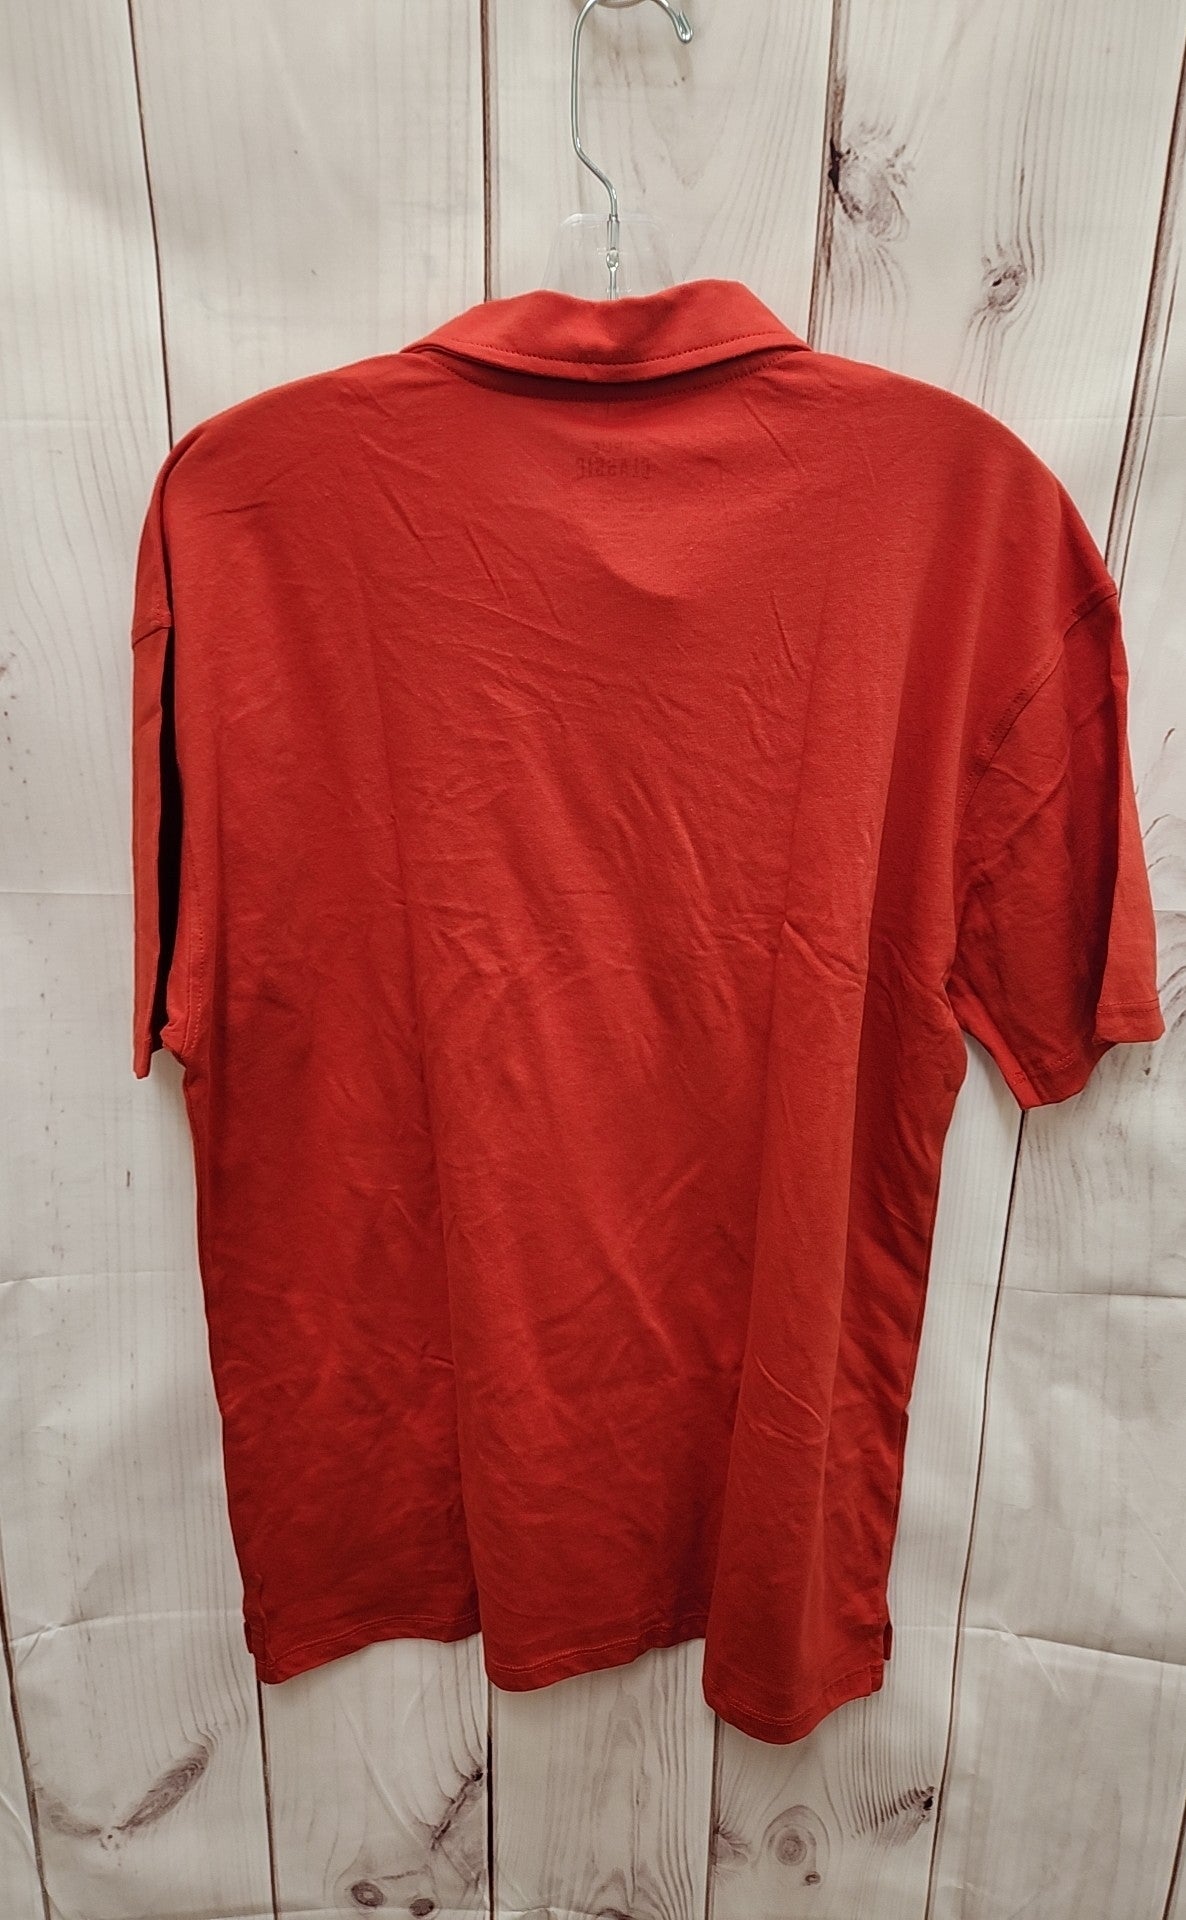 True Classic Men's Size XL Red Shirt